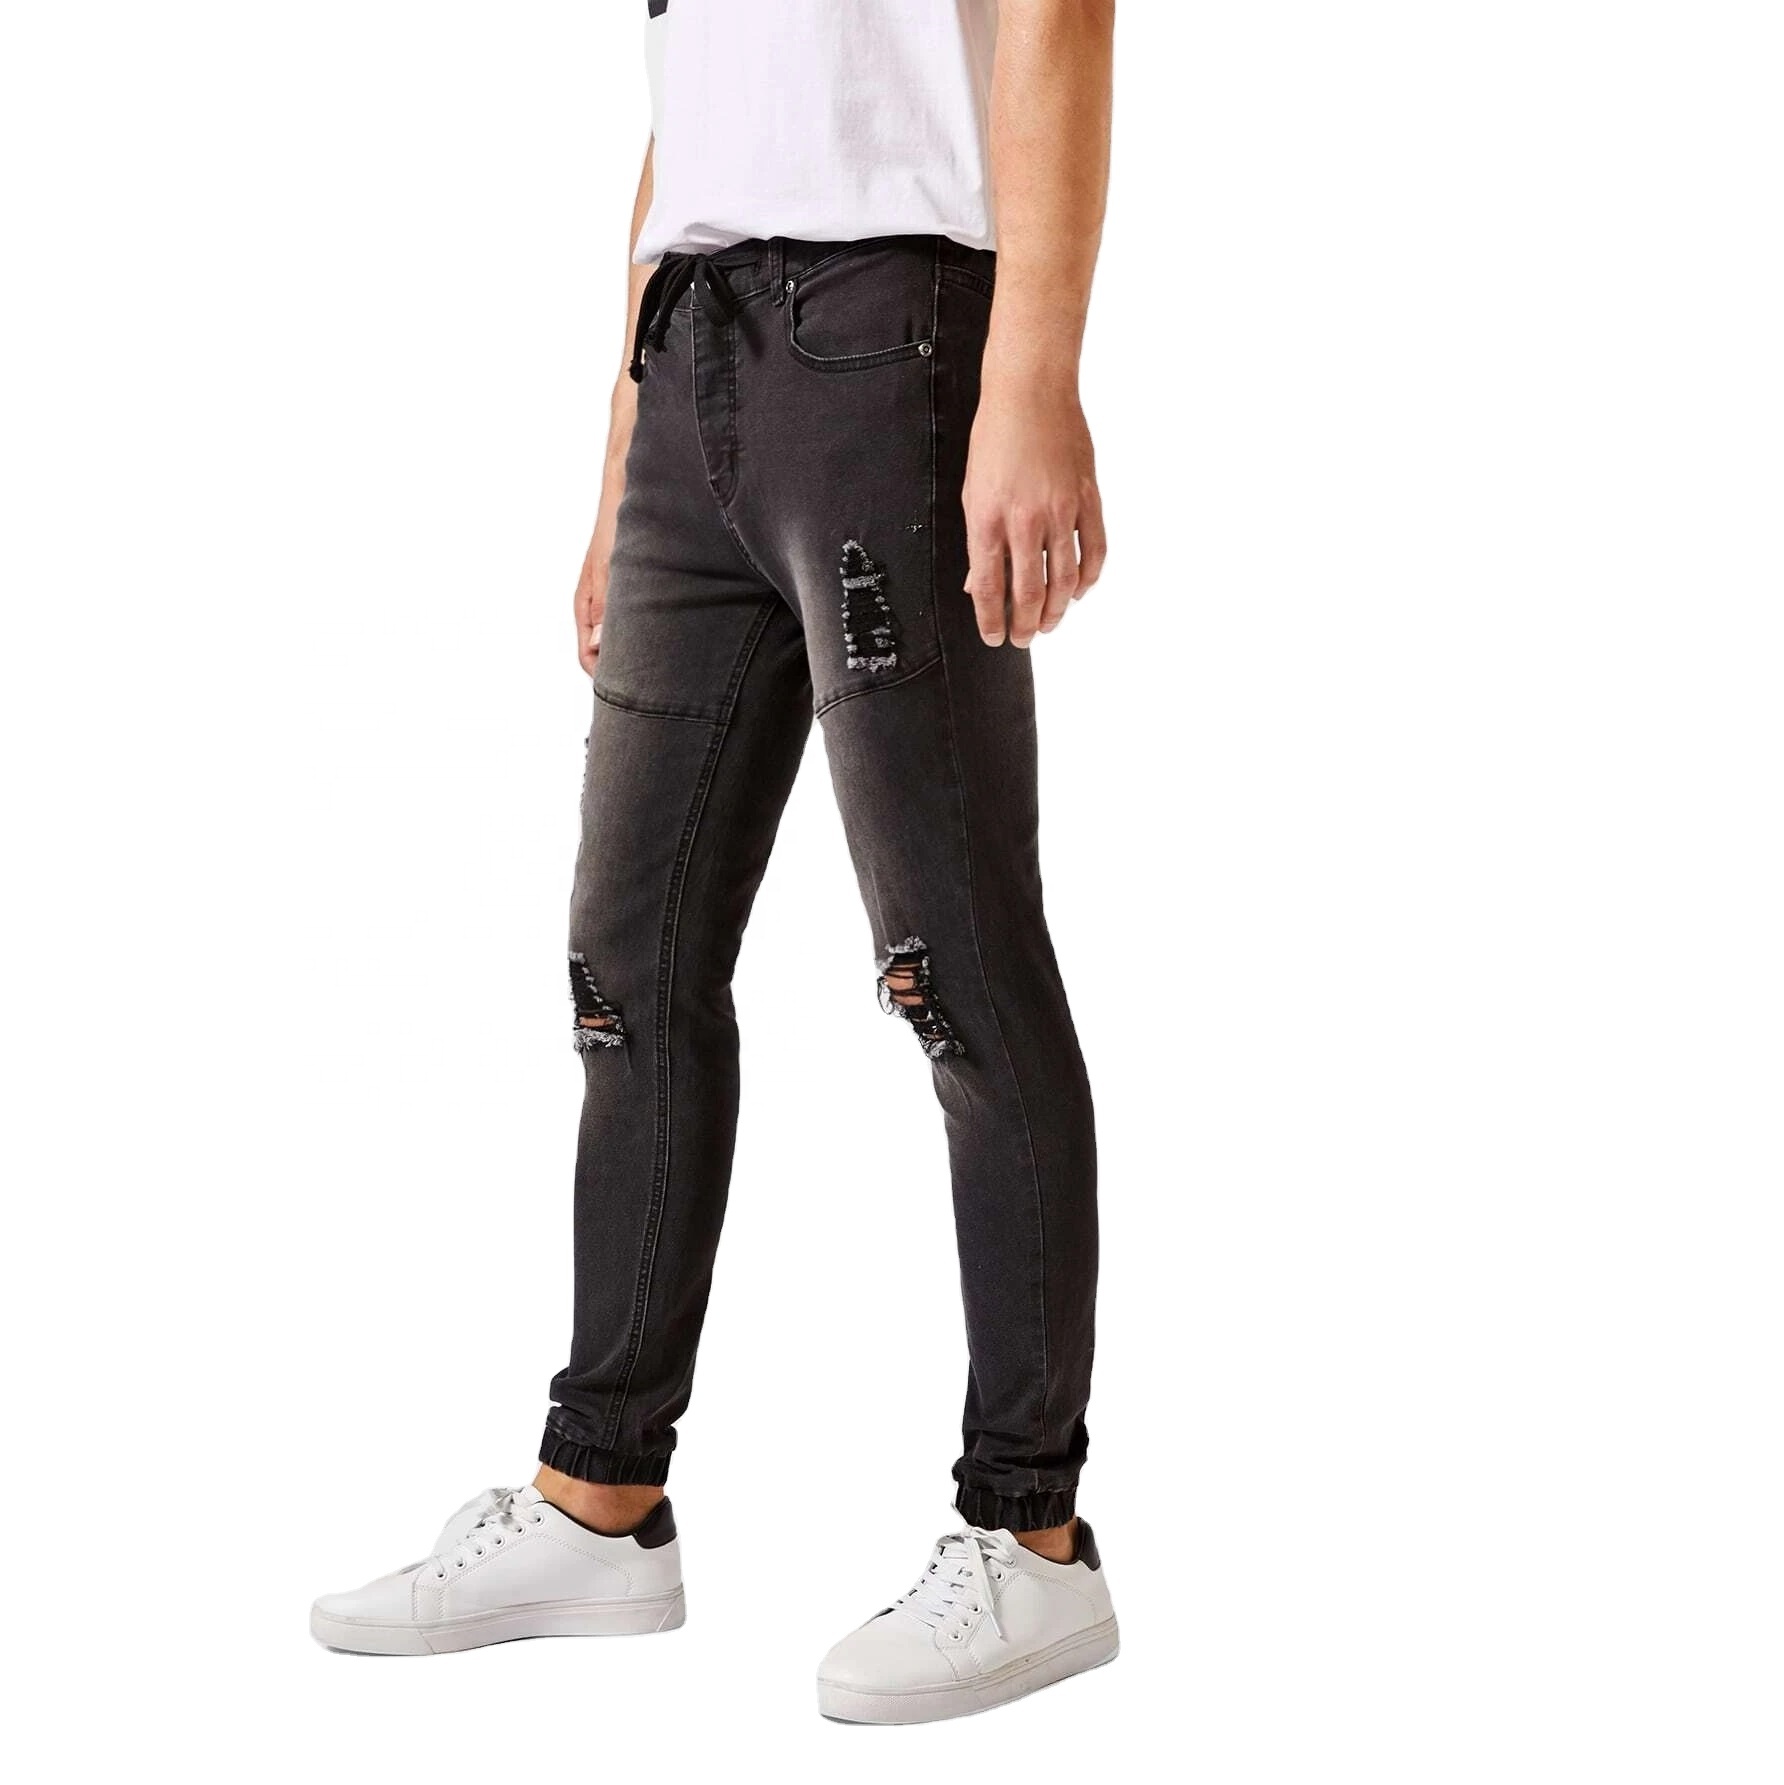 Biker Jeans Pants Slim Denim Cotton Dark Oem Customized Heavy Rips Fashion Mens Jeans